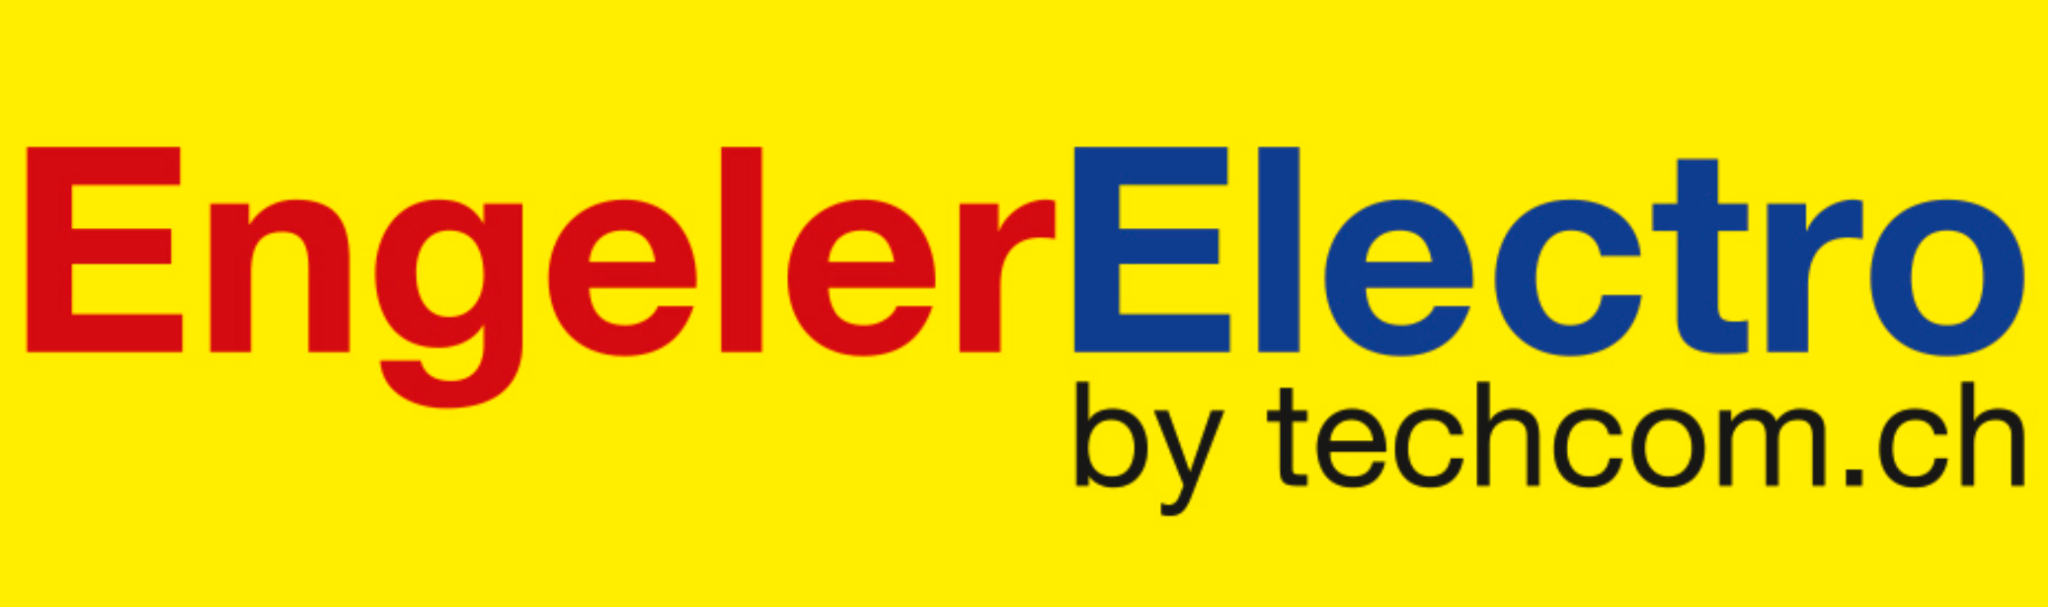 Engeler Electro by TechCom.ch